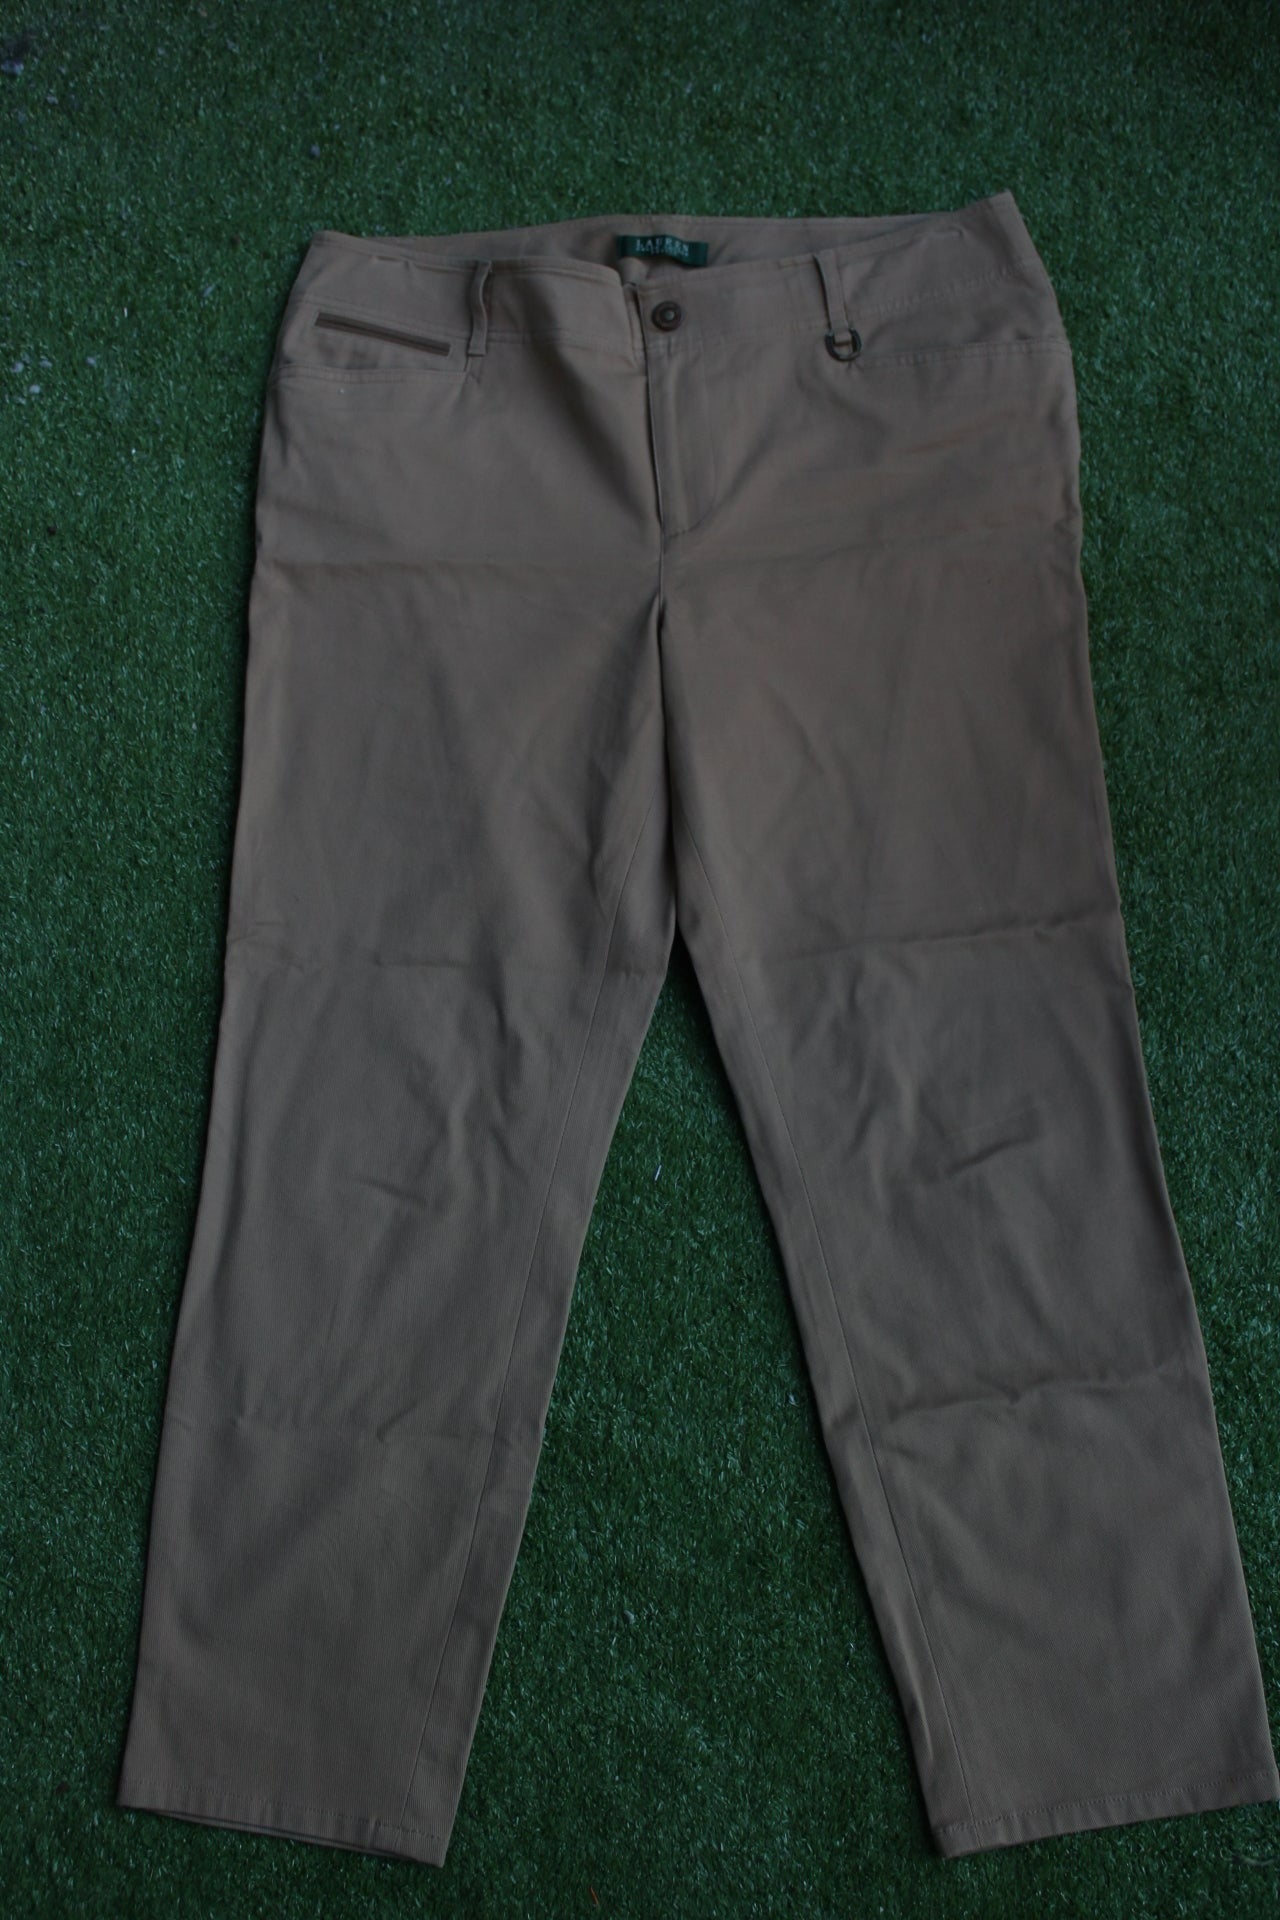 Ralph Lauren khaki pants (14P)